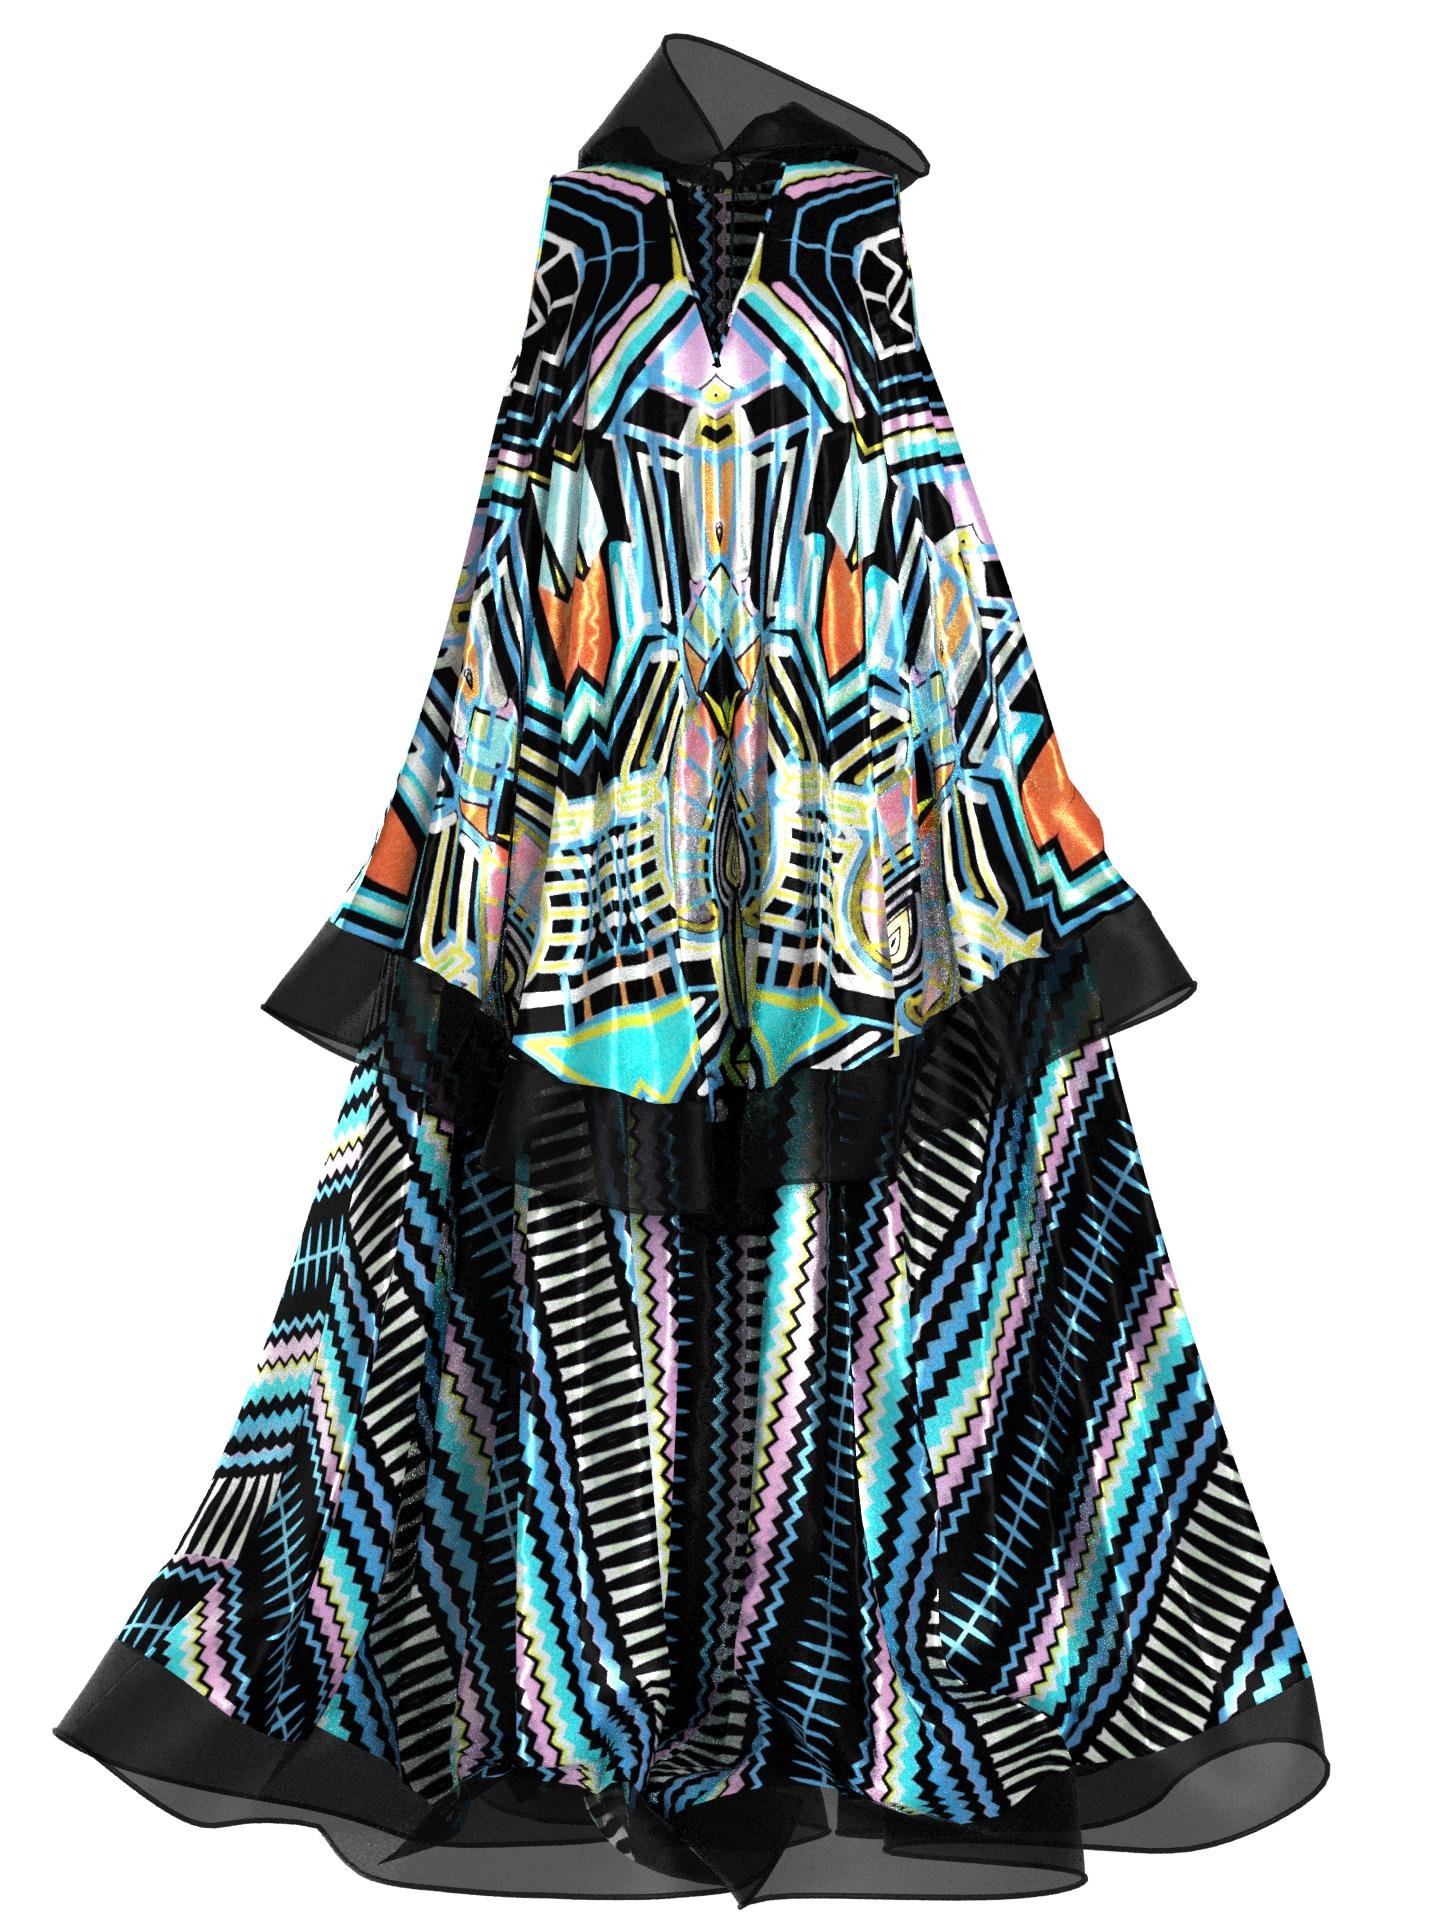 Lunar Maxi dress by DRAPE